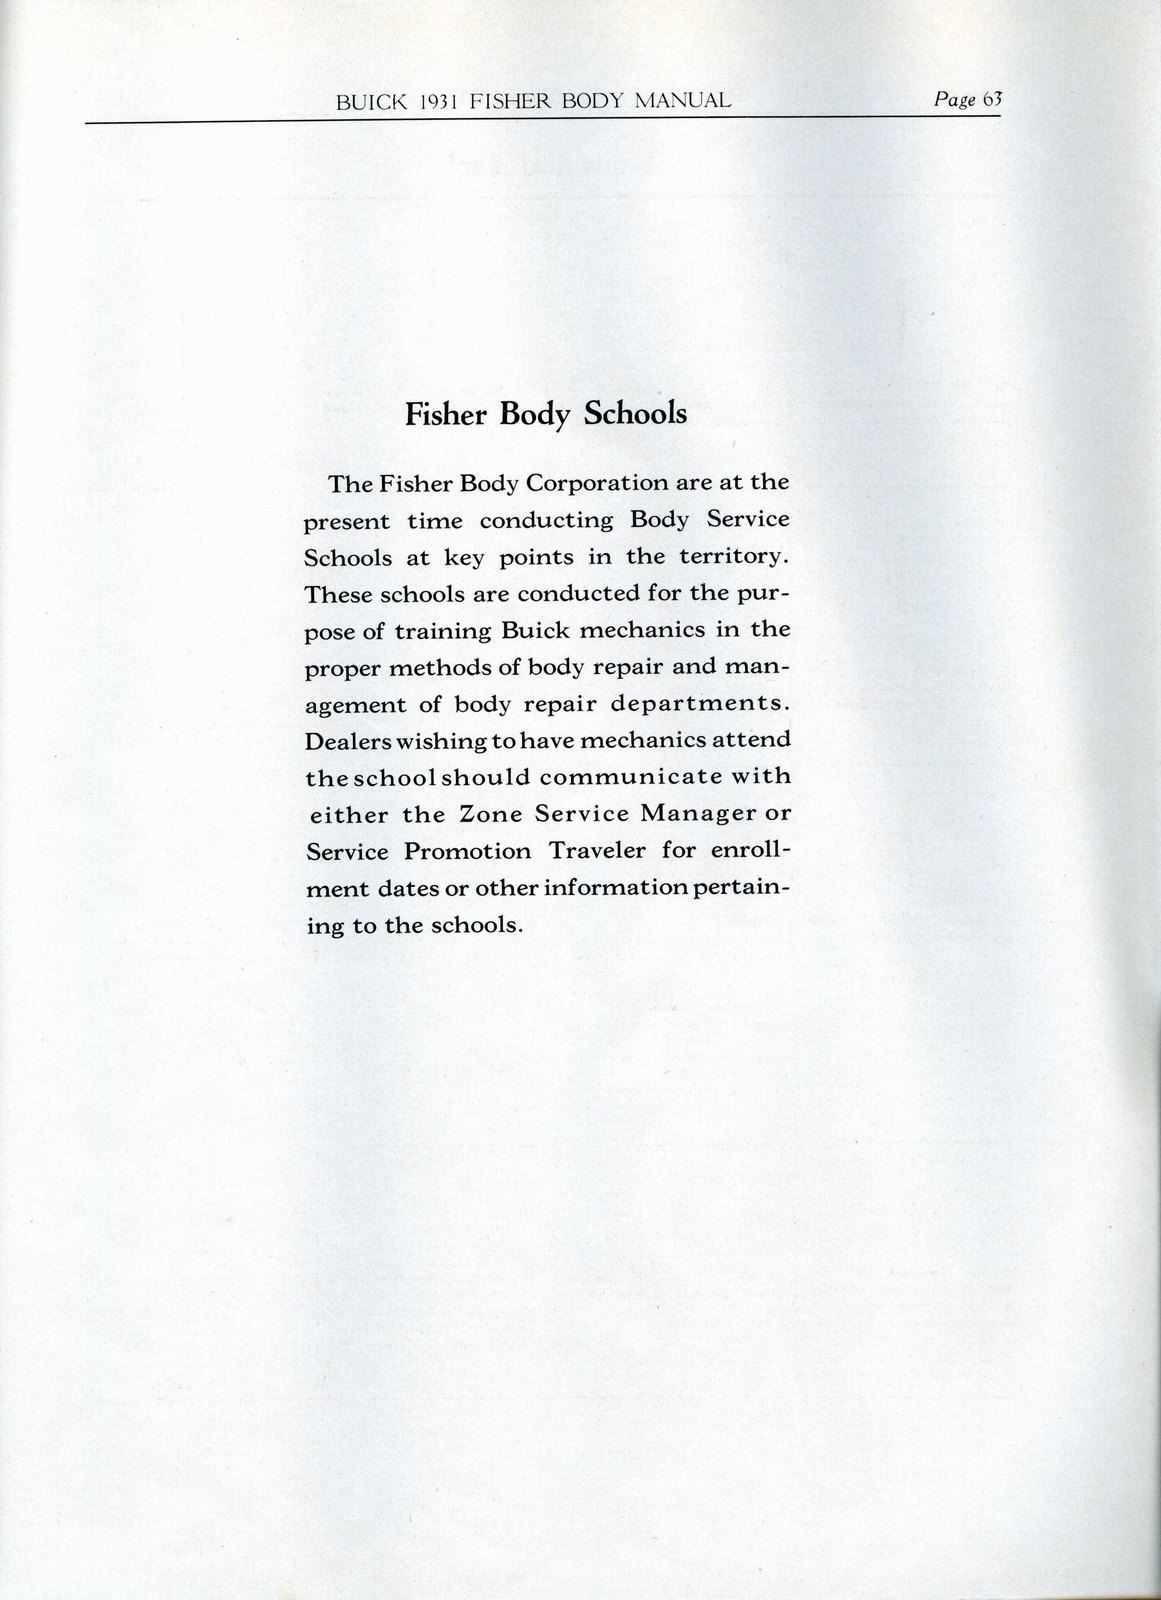 n_1931 Buick Fisher Body Manual-63.jpg